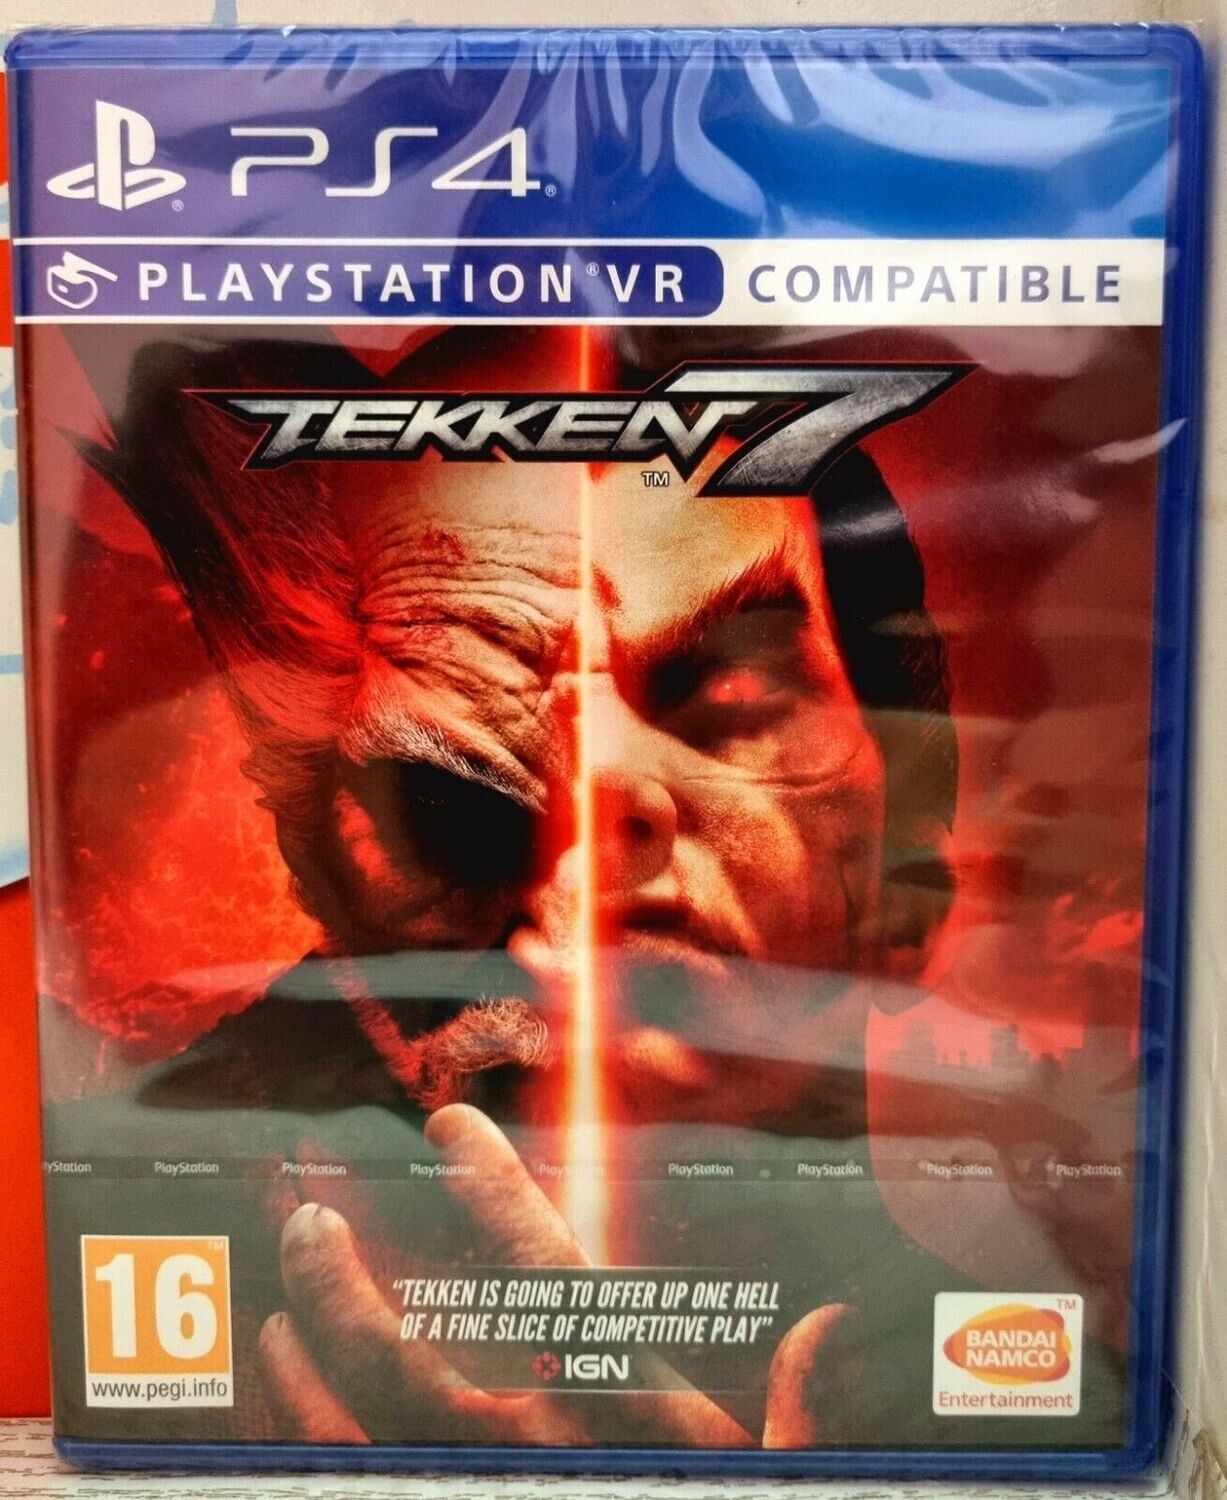 Tekken 7 PS4 - Gioco di combattimento per PlayStation 4